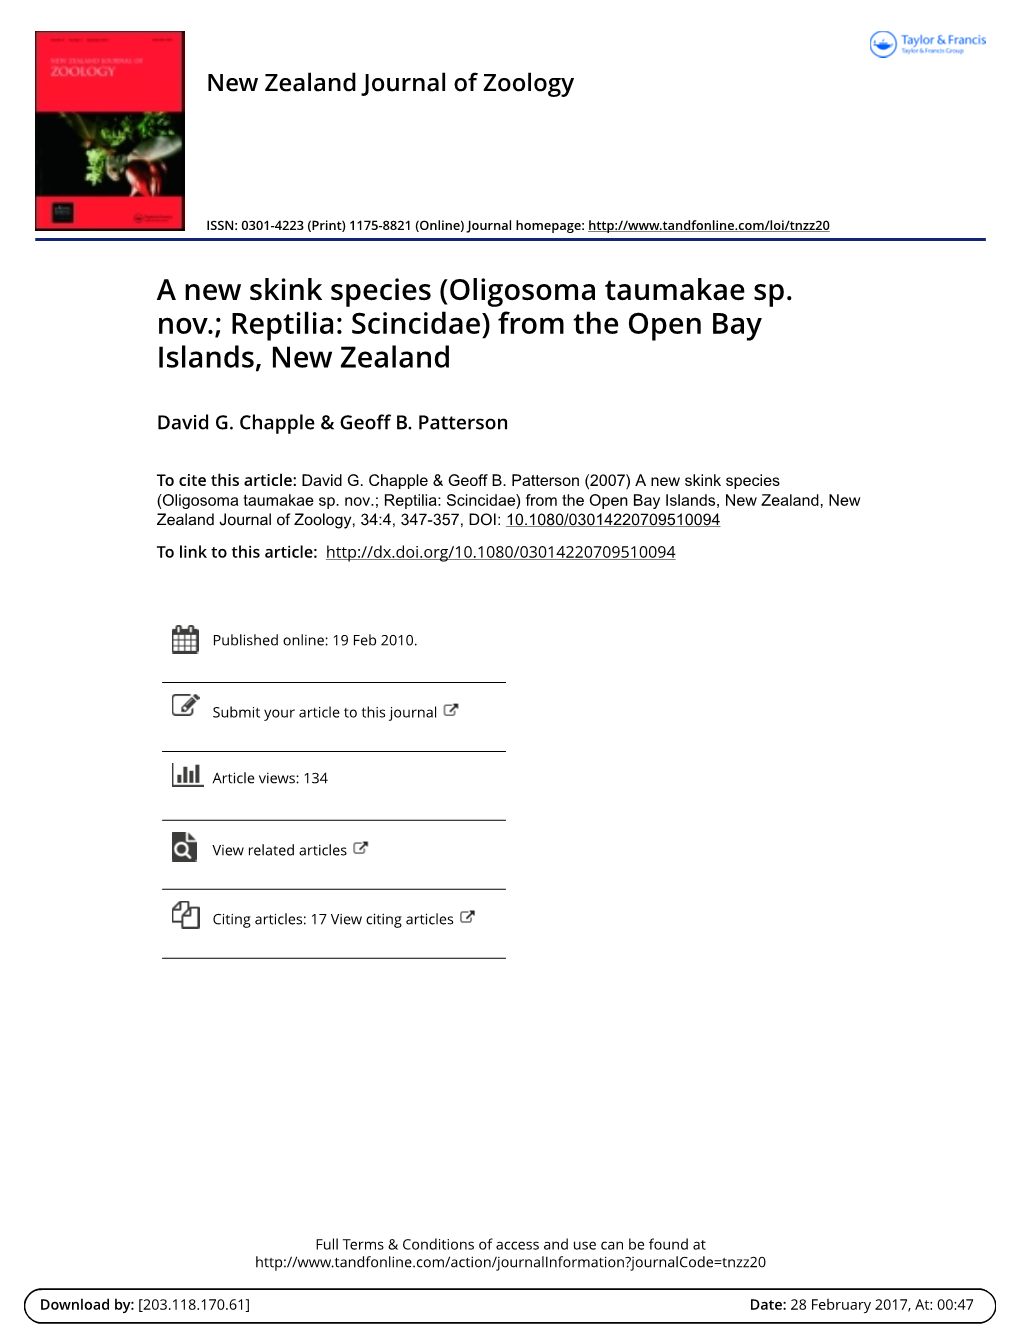 A New Skink Species (Oligosoma Taumakae Sp. Nov.; Reptilia: Scincidae) from the Open Bay Islands, New Zealand